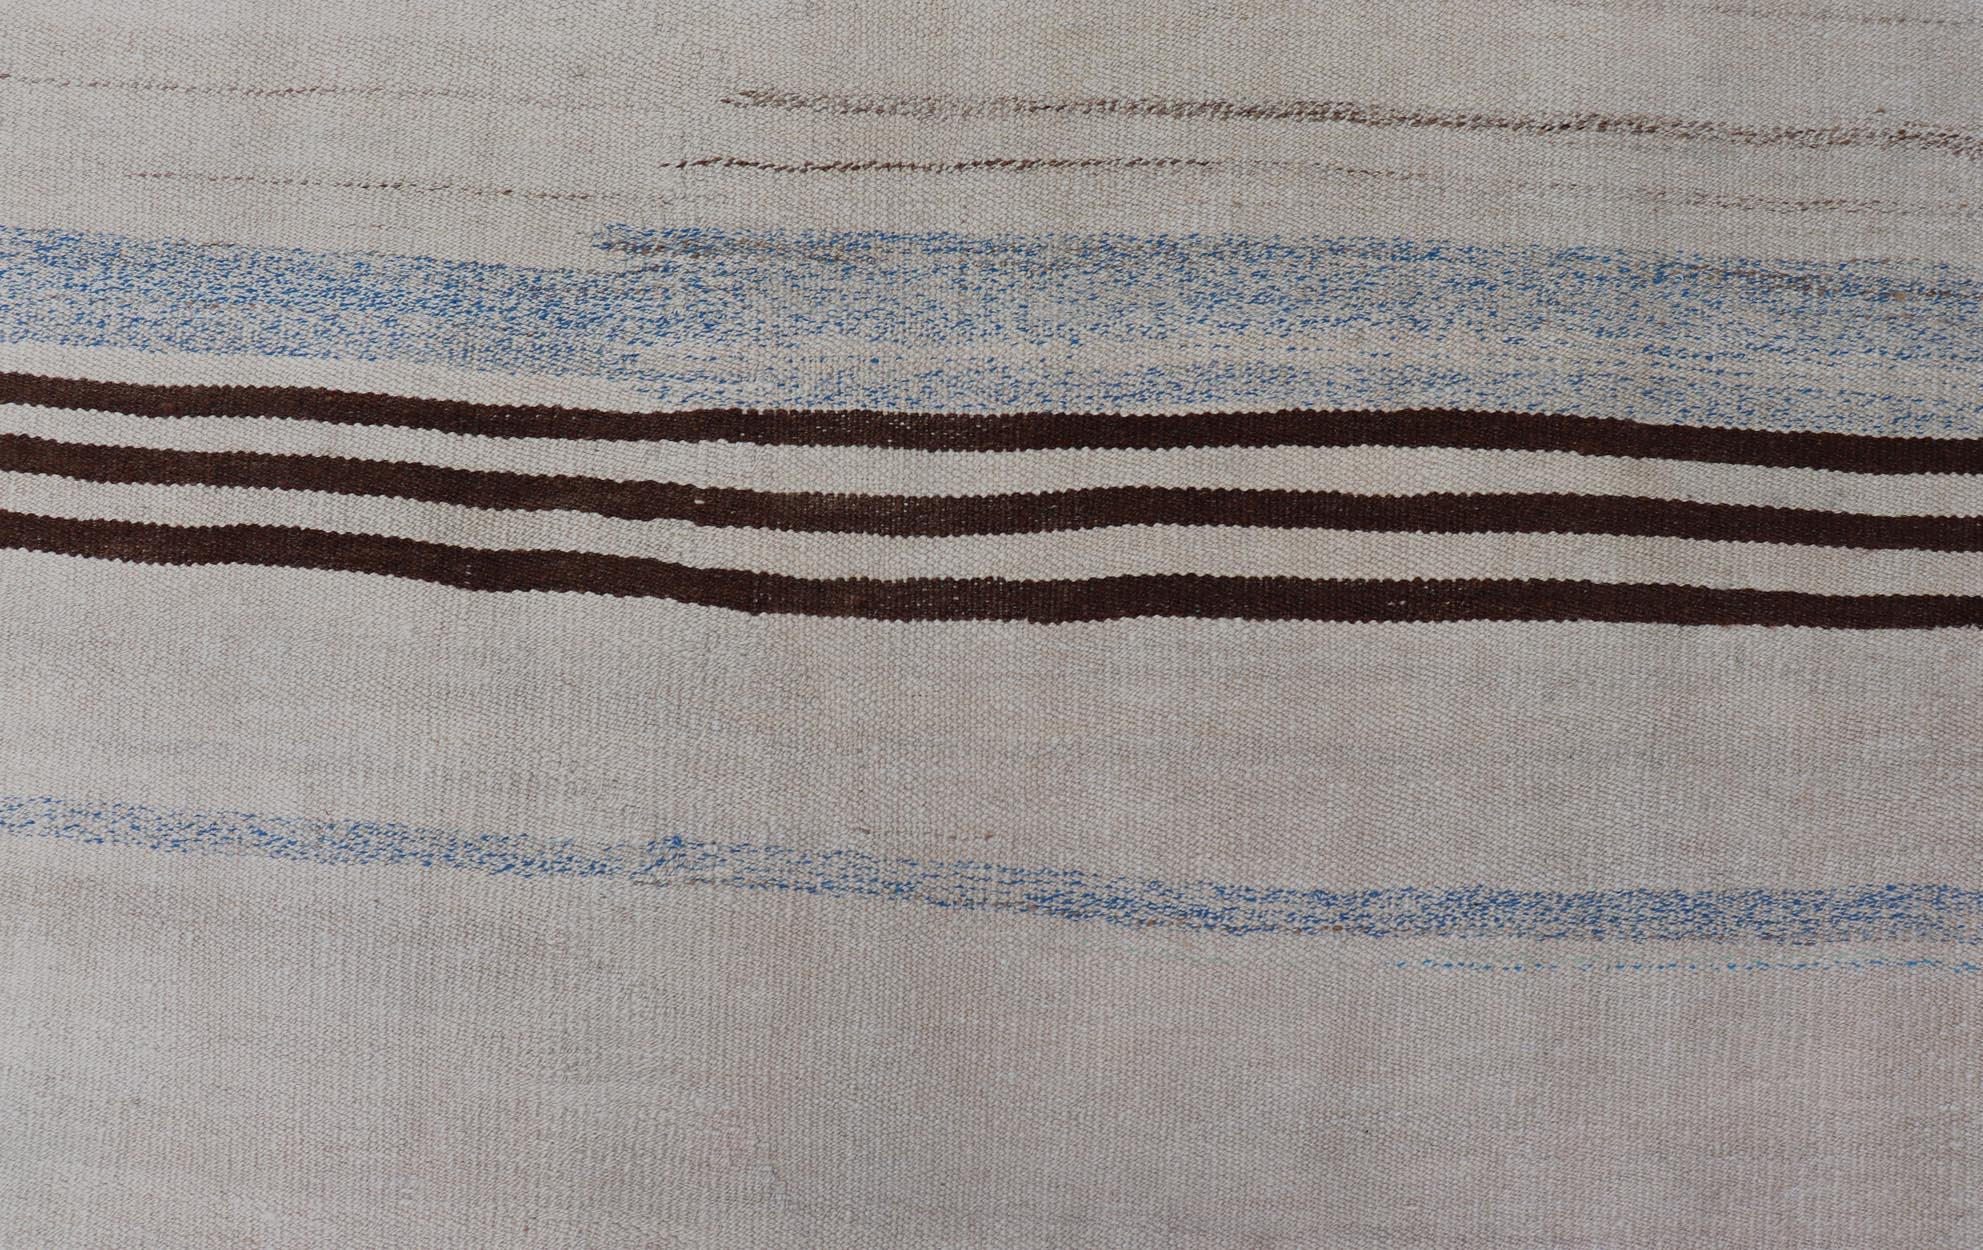 Striped Turkish Vintage Kilim Flat-Weave Rug in Brown's and Ivory. Keivan Woven Arts / rug EN-15167, country of origin / type: Turkey / Kilim, circa 1950
Measures: 5'0 x 7'0 
This vintage striped design Kilim from Turkey rendered in shade of brown's